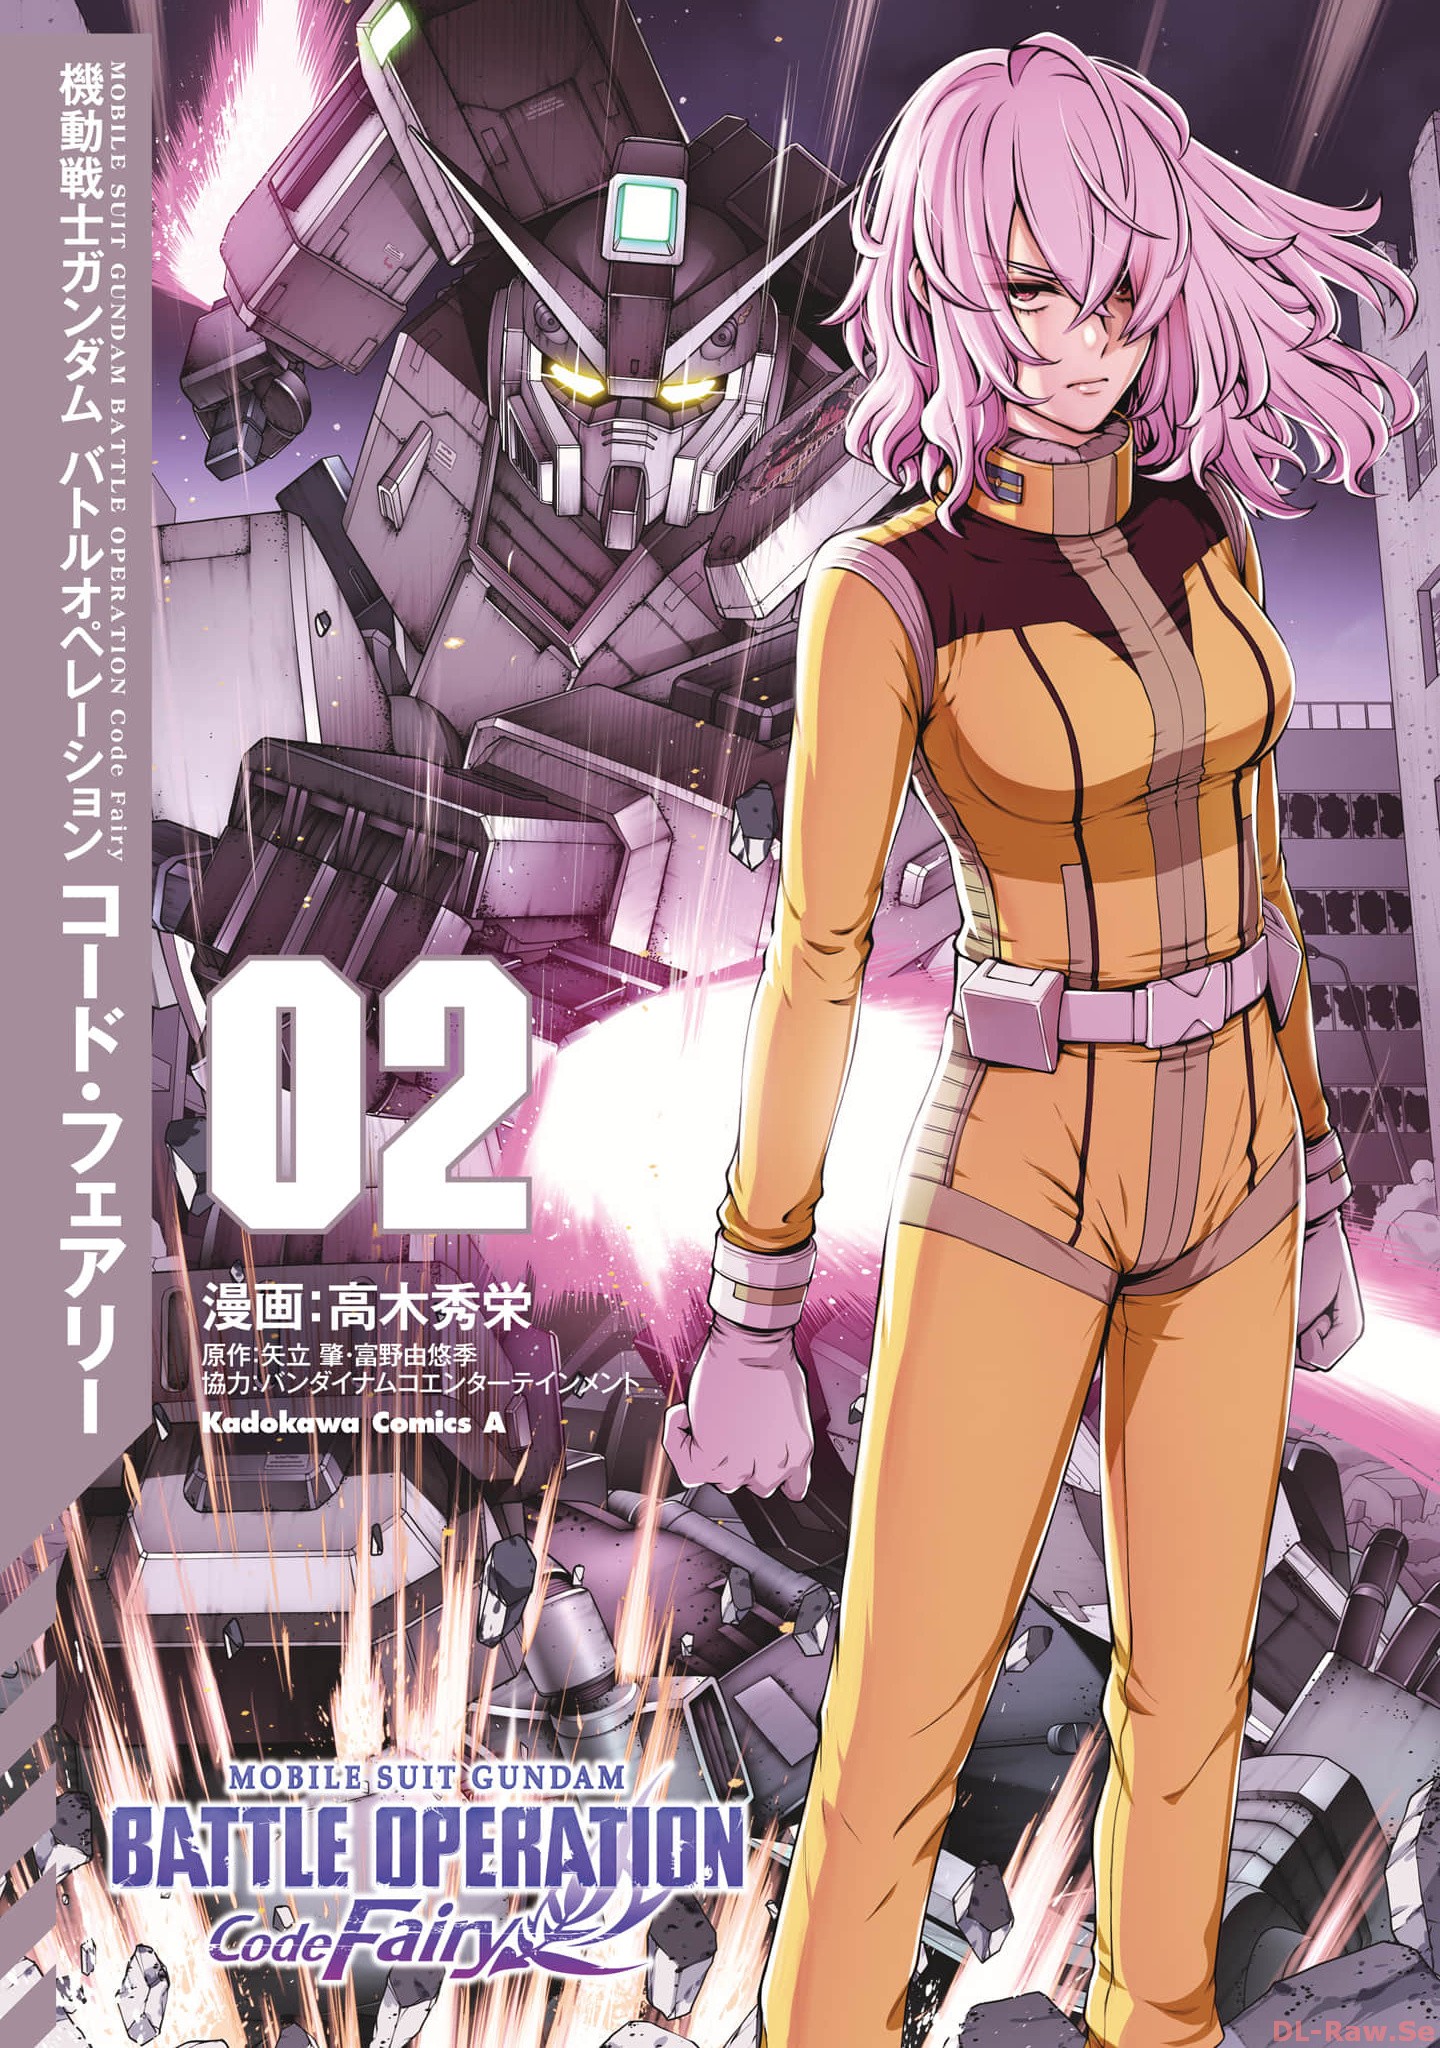 Mobile Suit Gundam: Battle Operation Code Fairy - Page 1